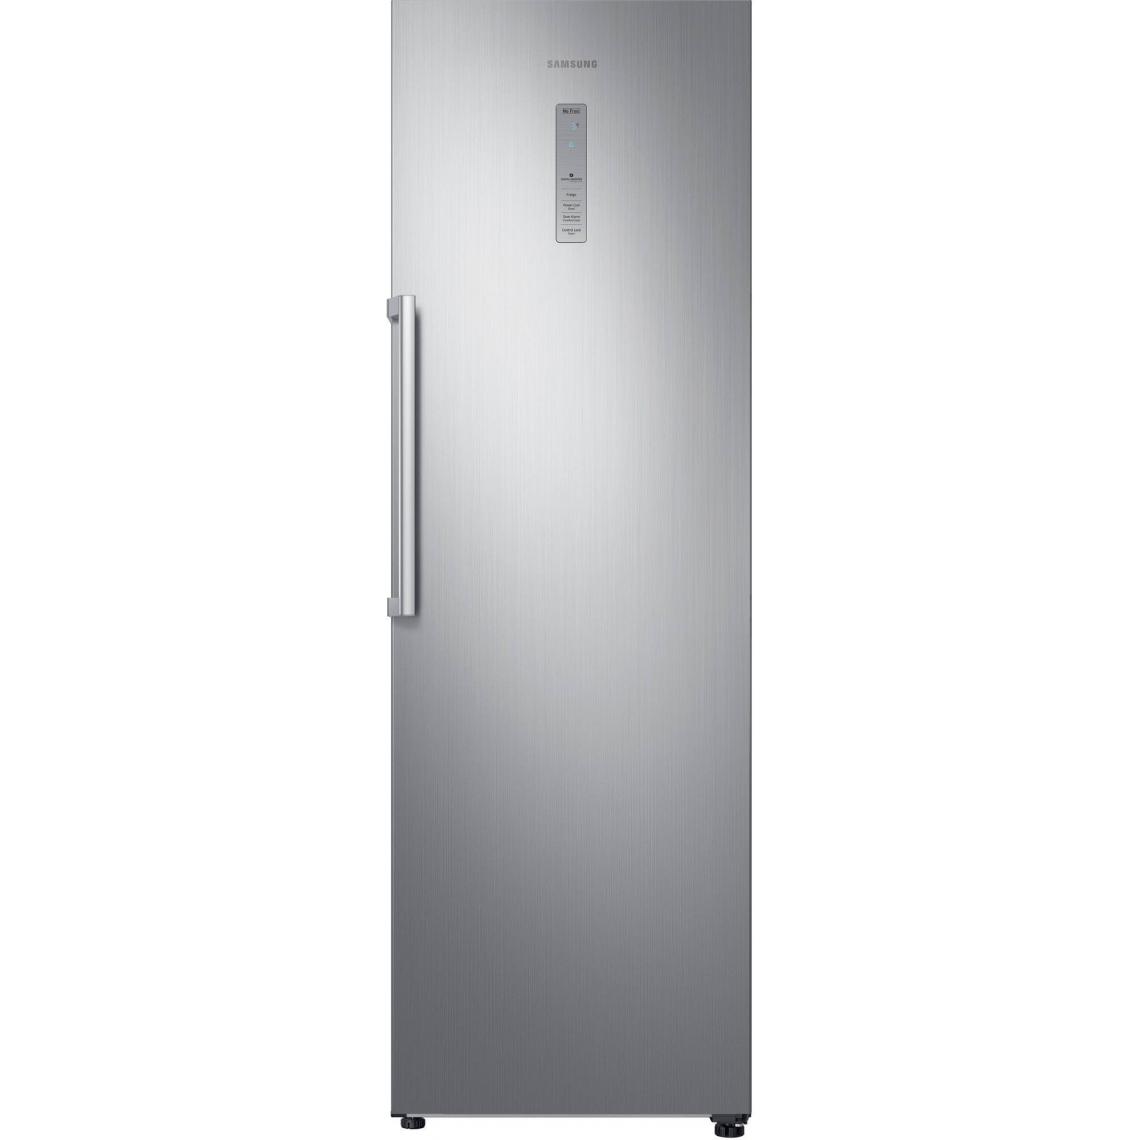 Samsung - samsung - rr39m7135s9 - Réfrigérateur